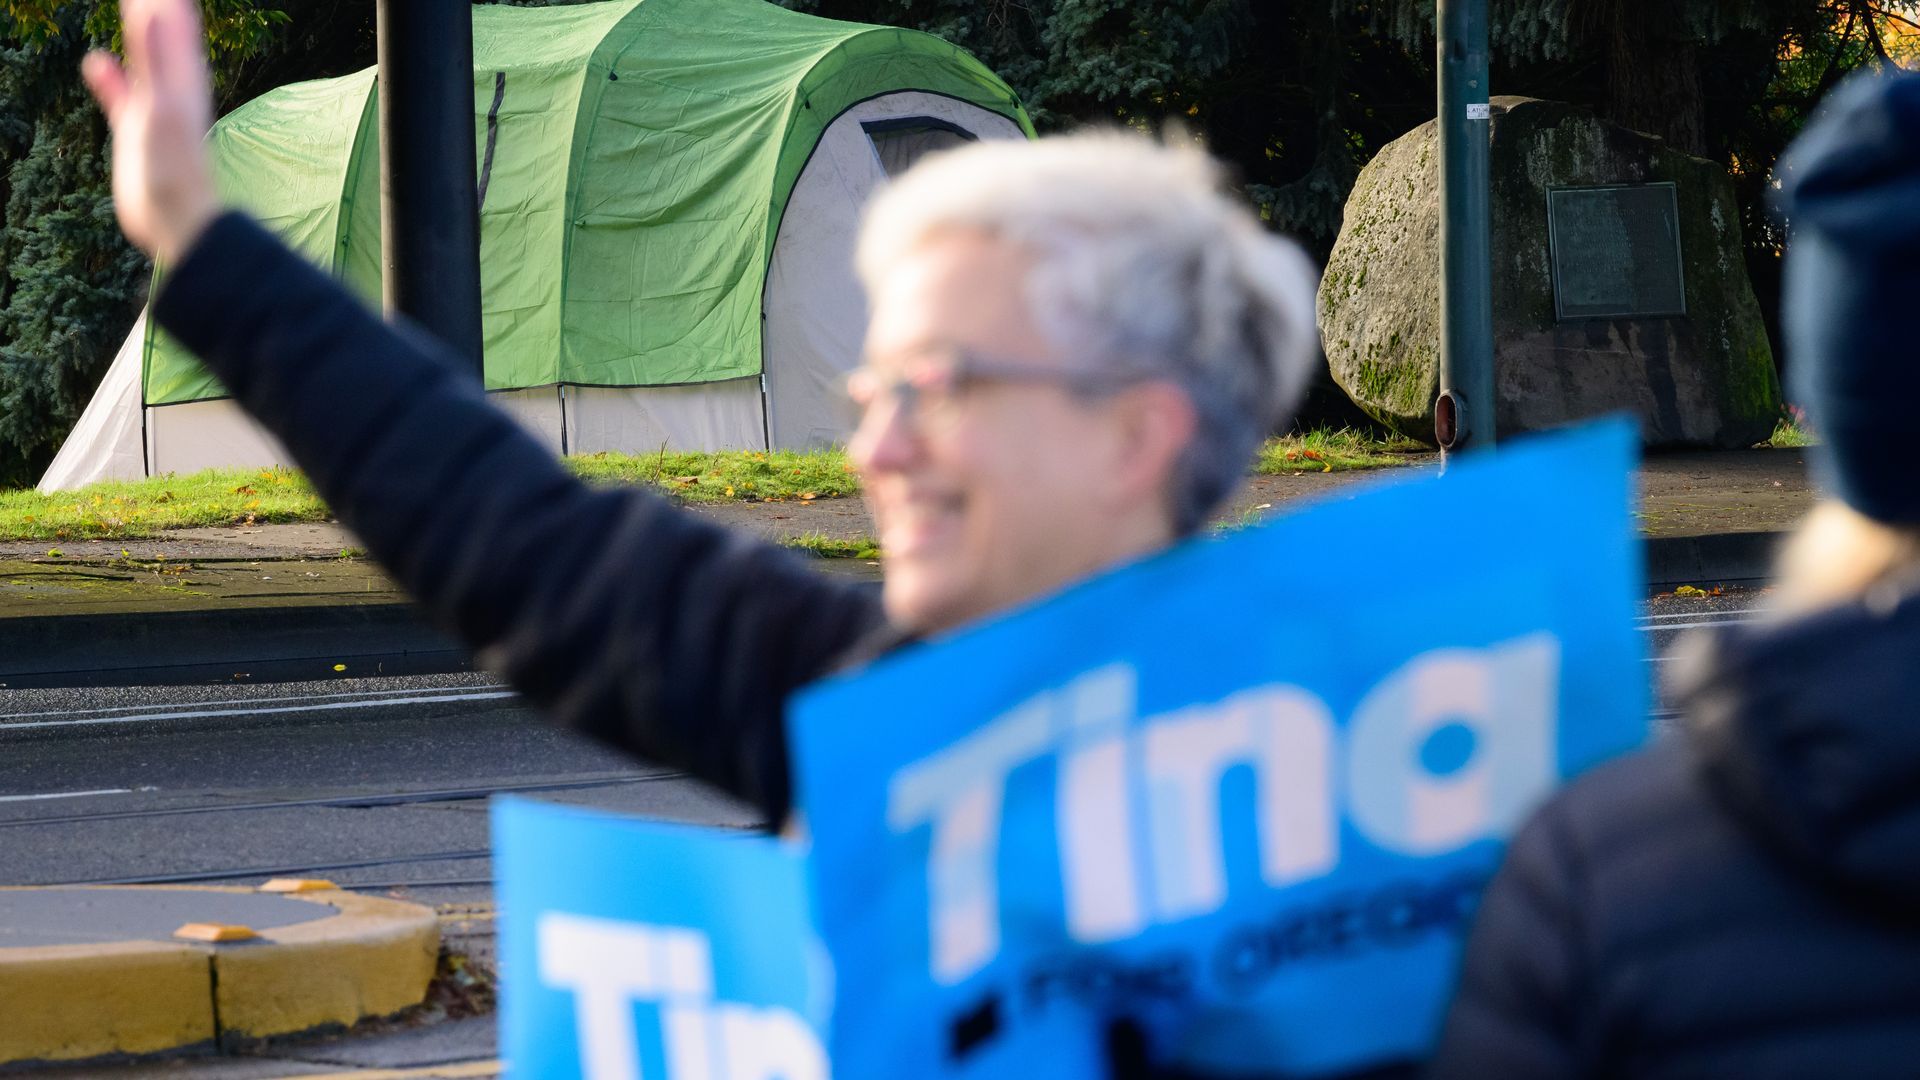 Gov. tina Kotek stands outside campaigning and holding a sign.